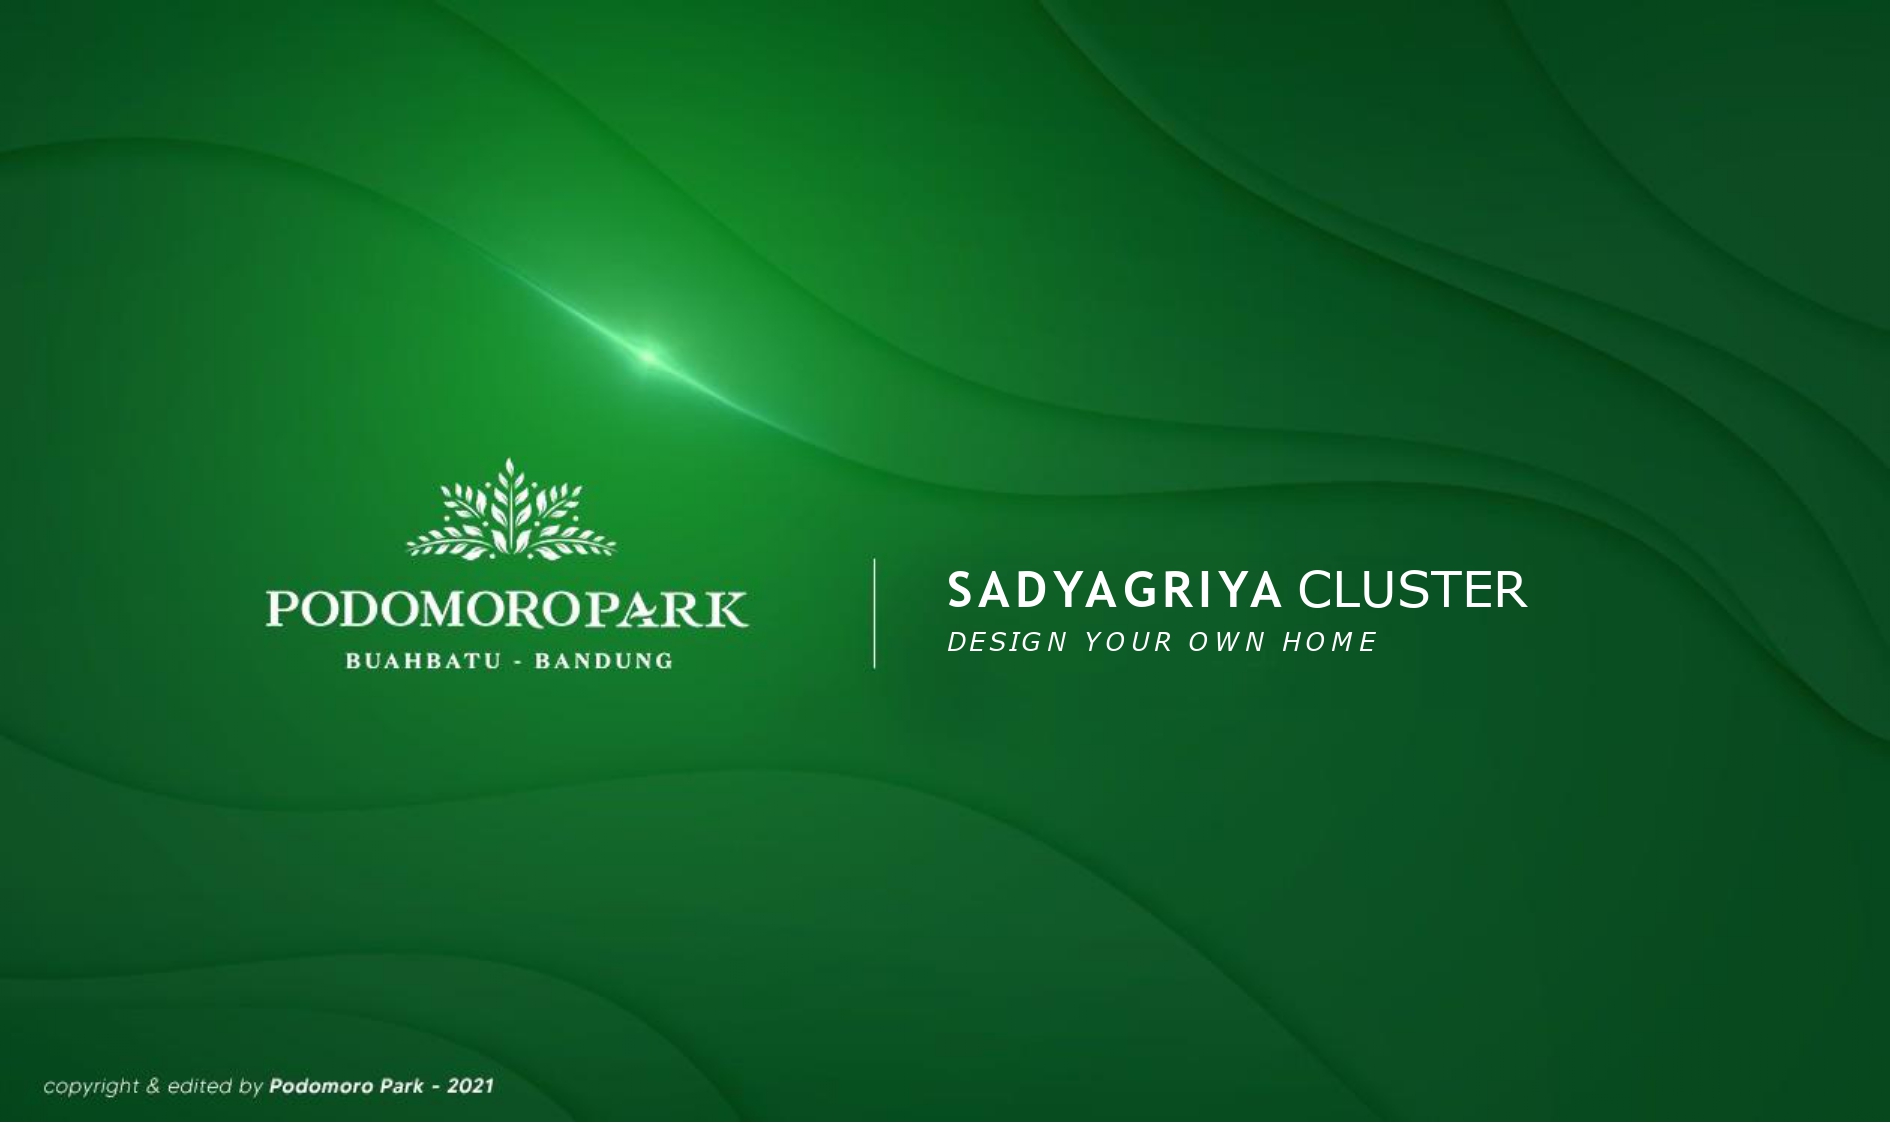 Sadyagriya Cluster